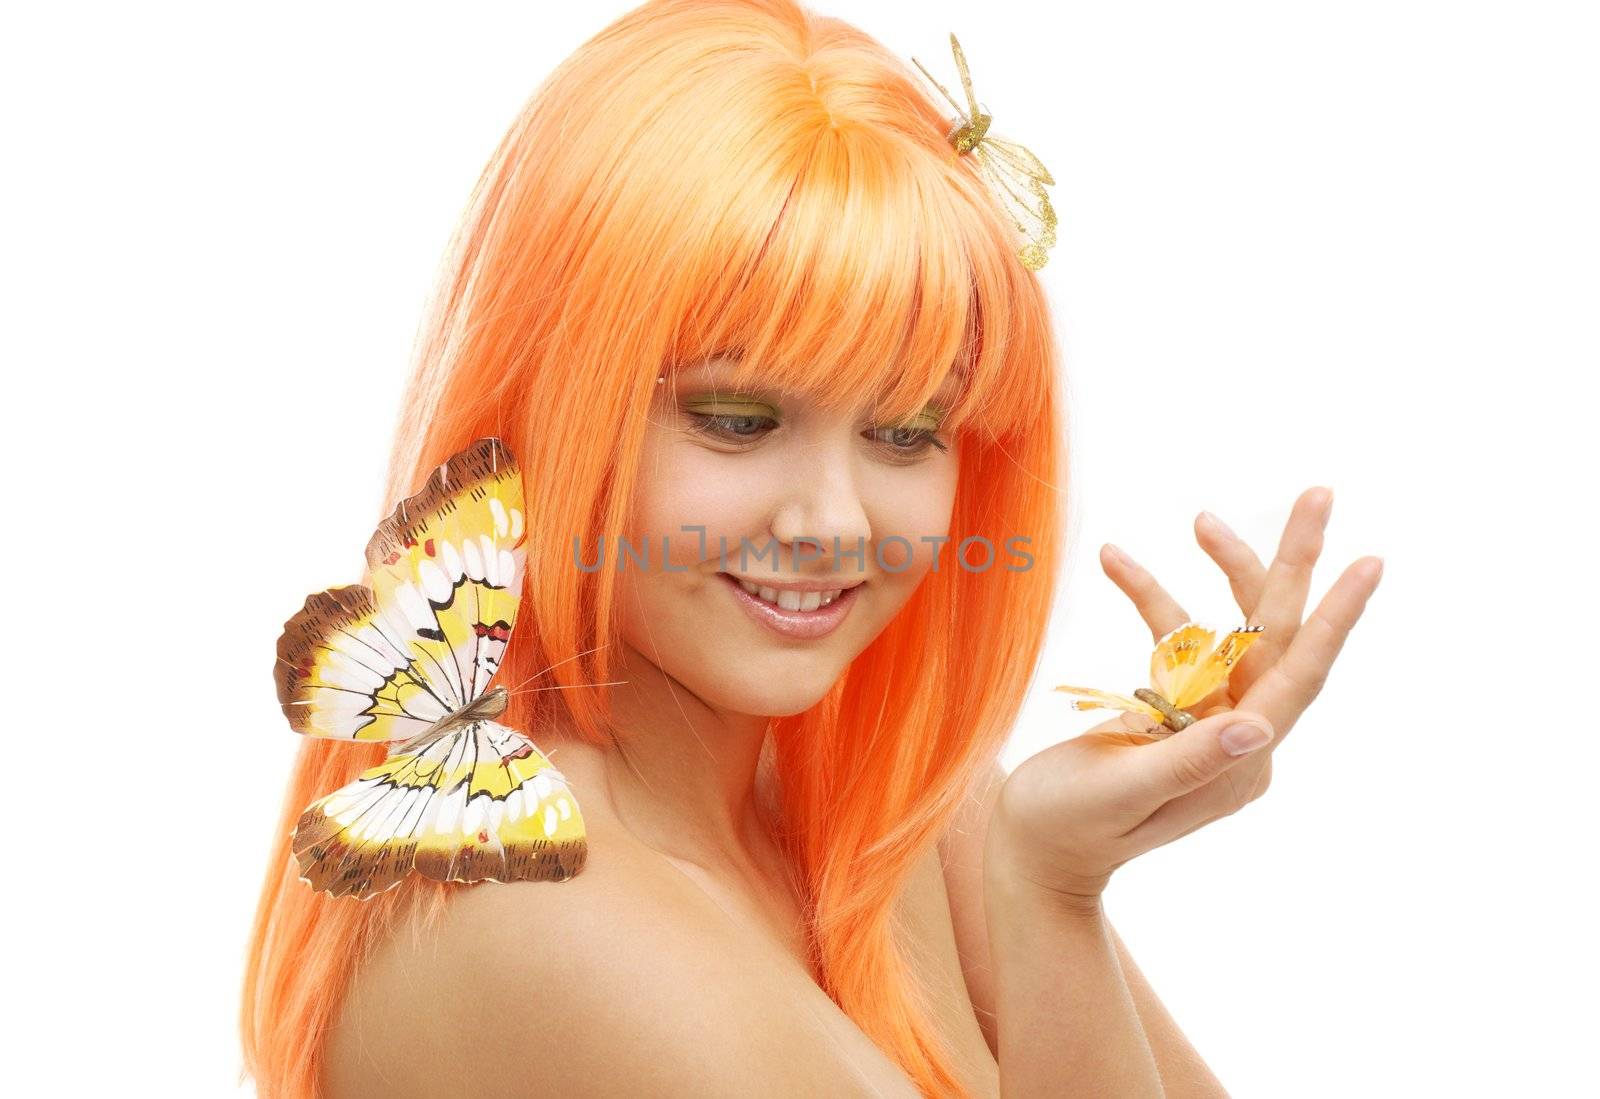 butterfly girl by dolgachov